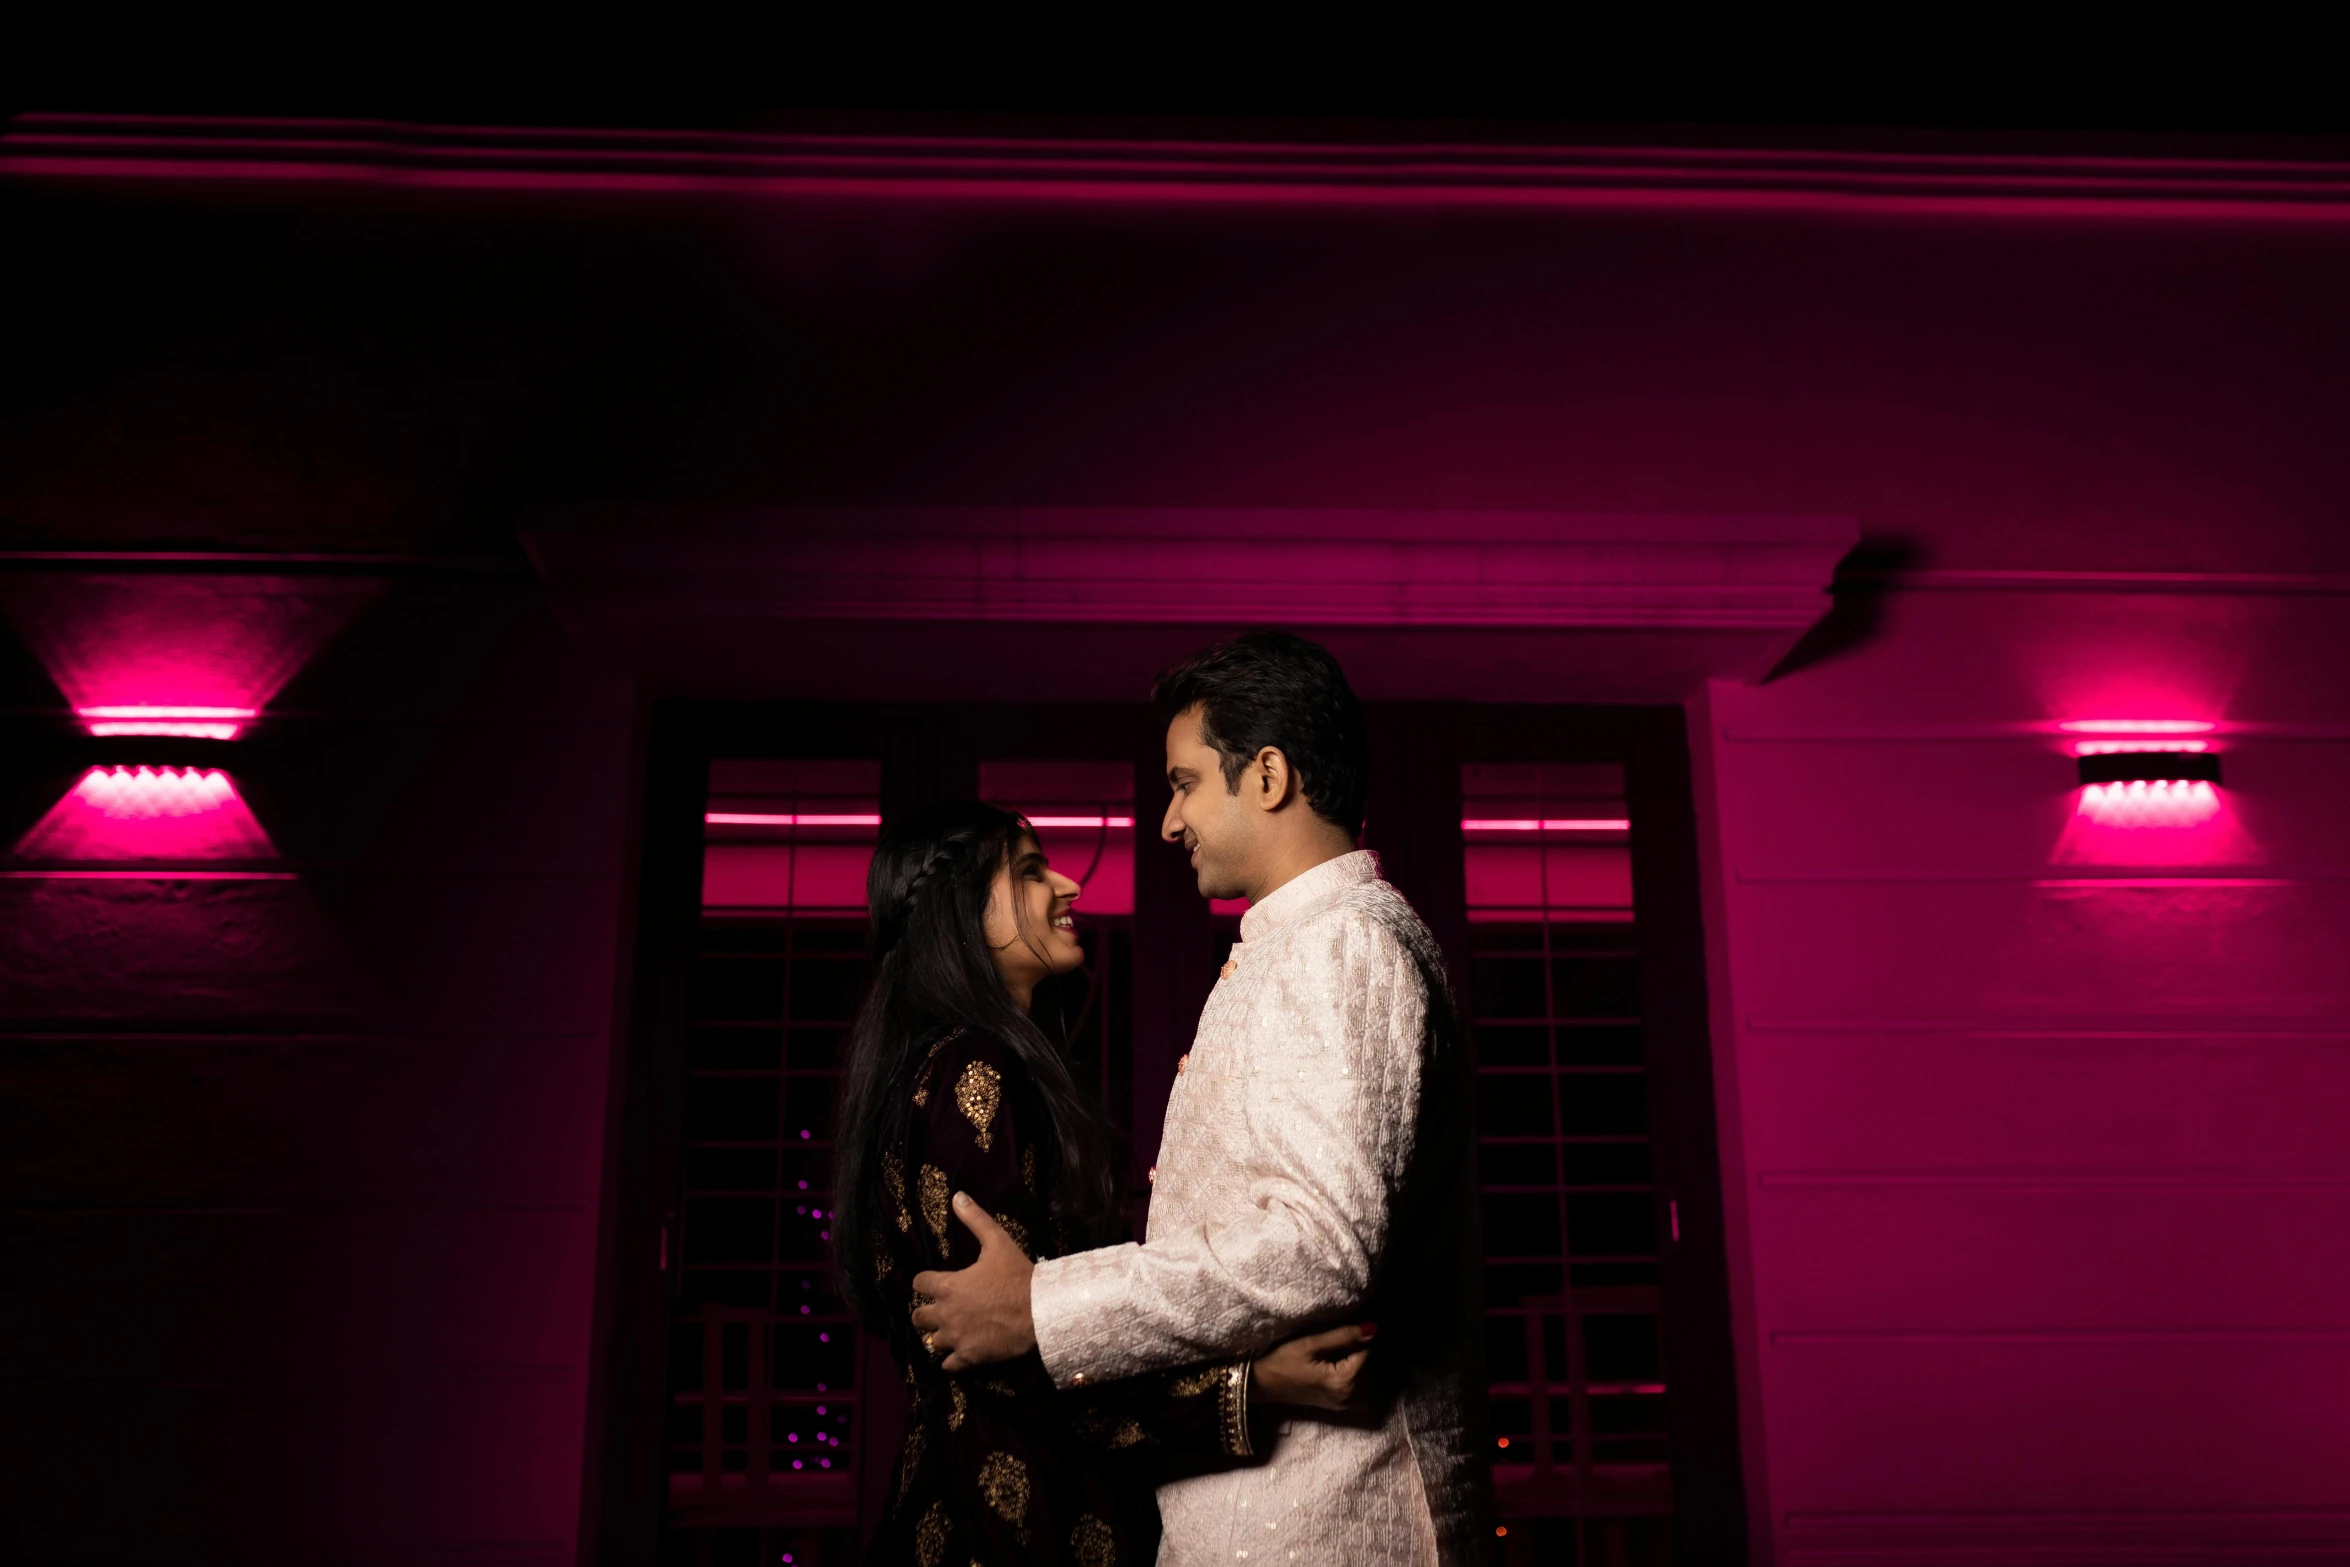 a man standing next to a woman under purple lights